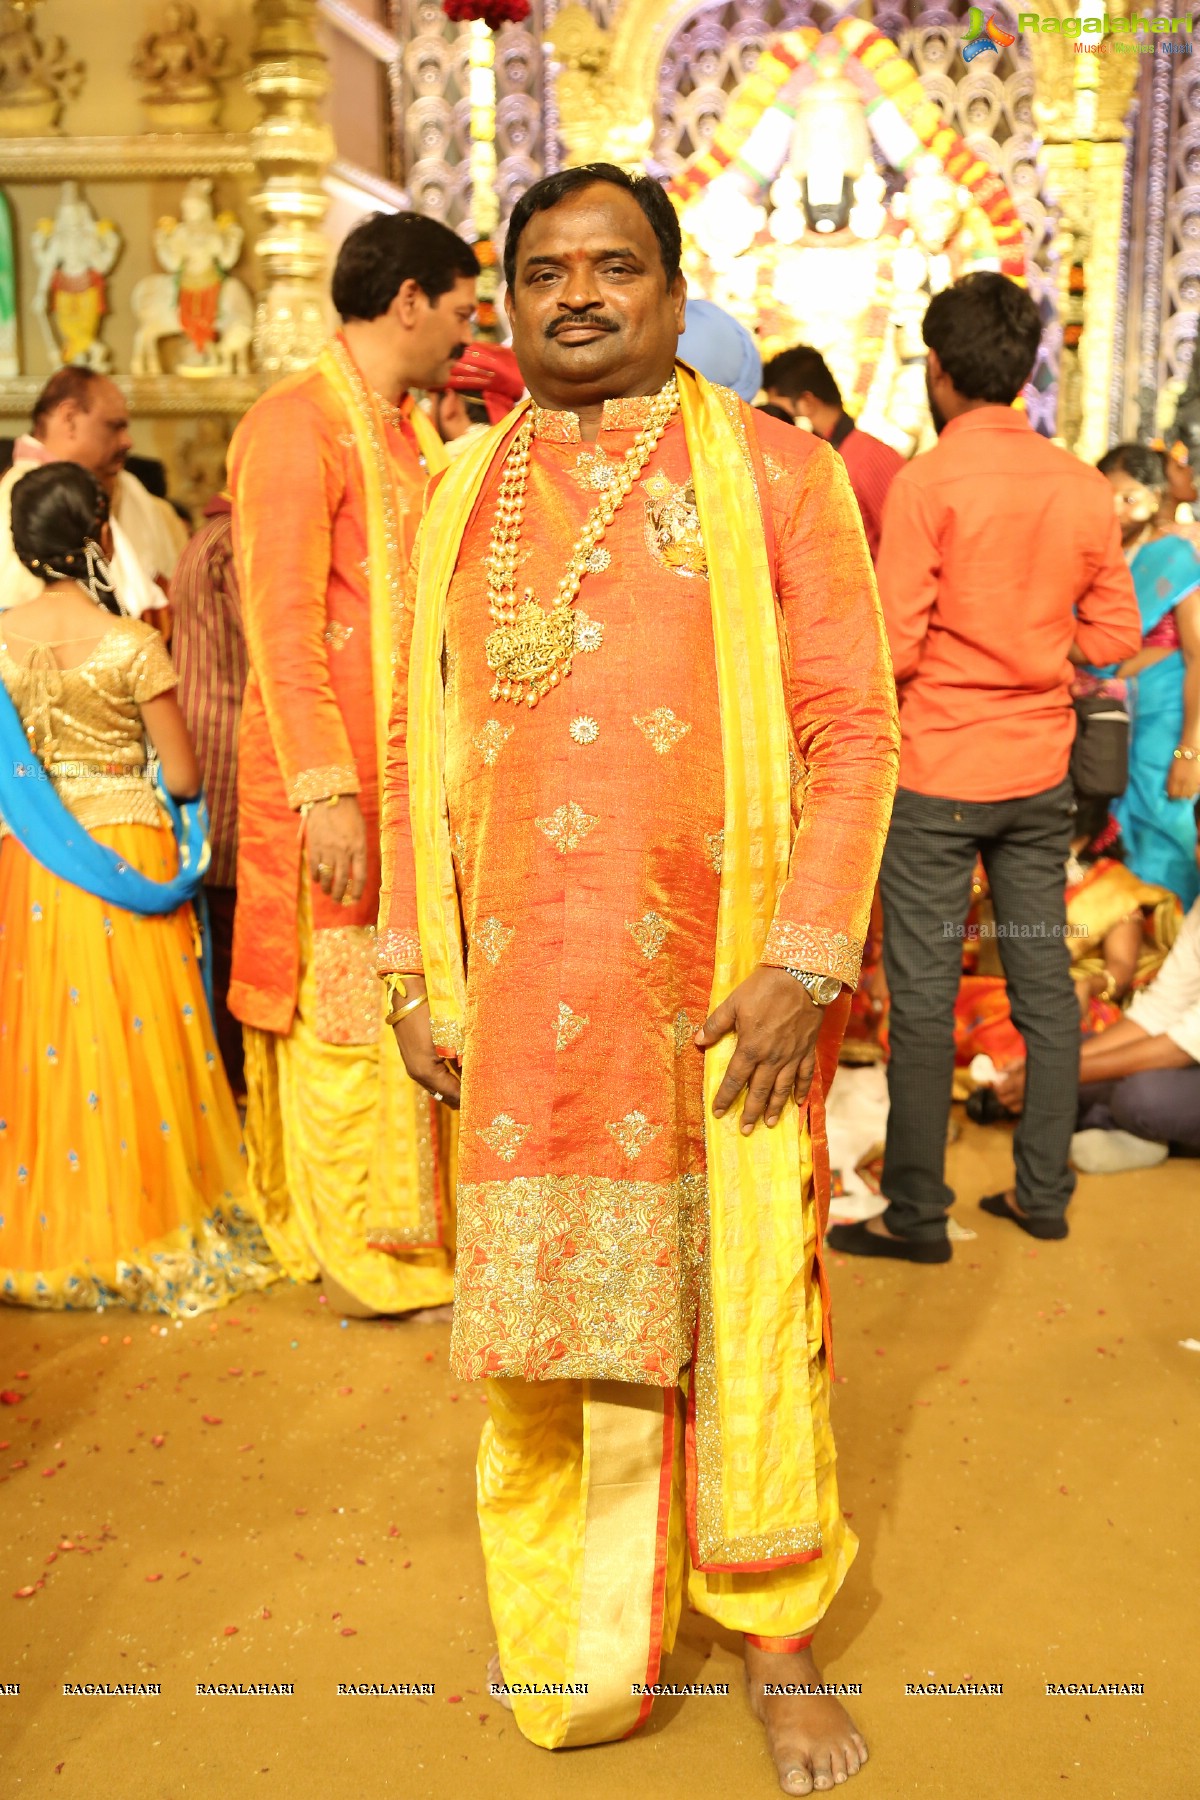 Grand Wedding Ceremony of Sai Rajesh with Divya at Shree Convention, Kompally, Hyderabad